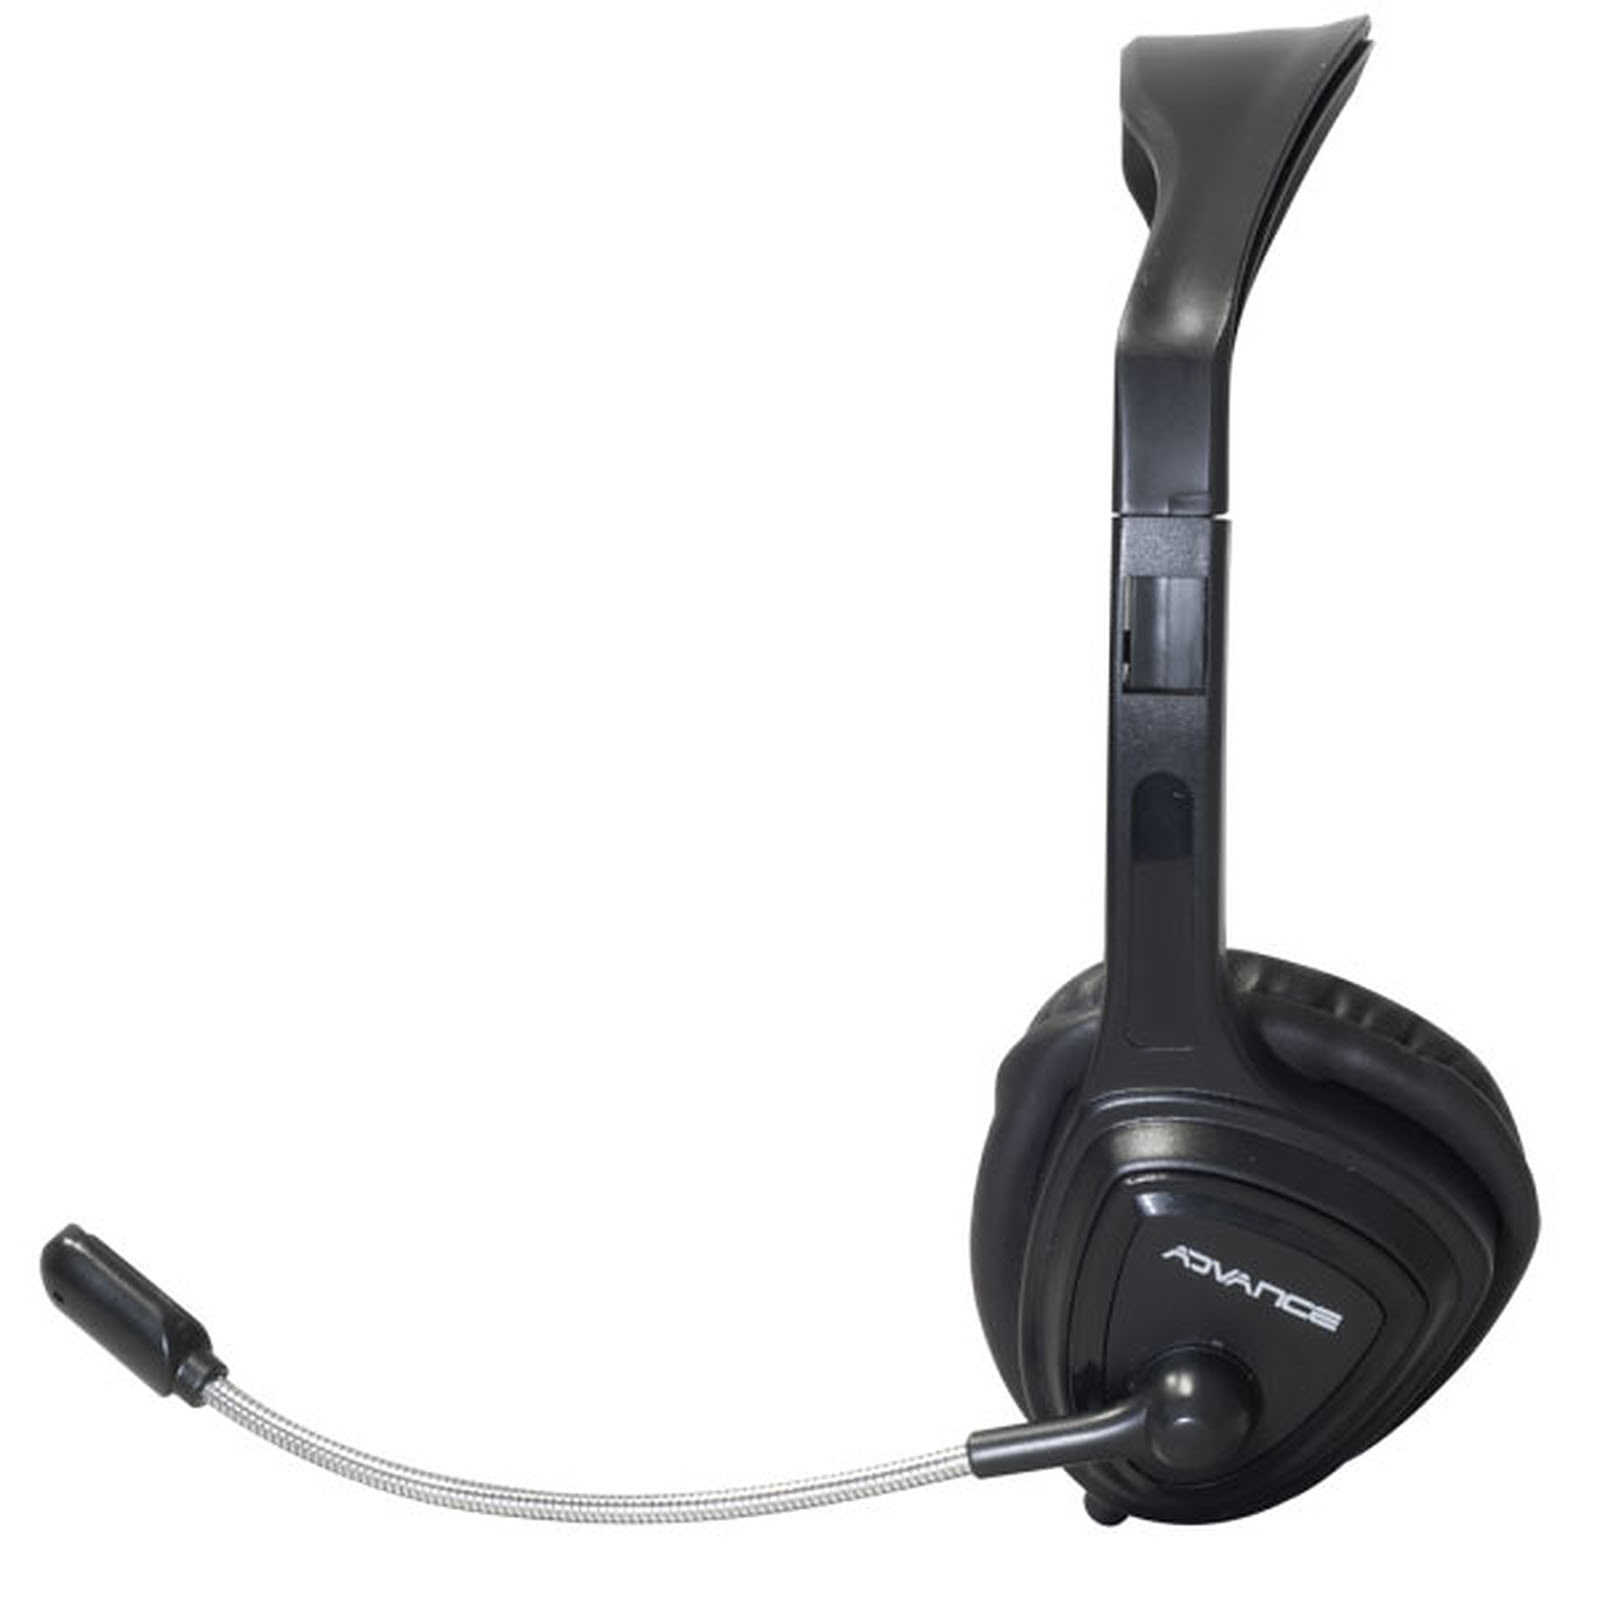 Advance Headphonics Smart Stereo Noir - Micro-casque - Cybertek.fr - 4